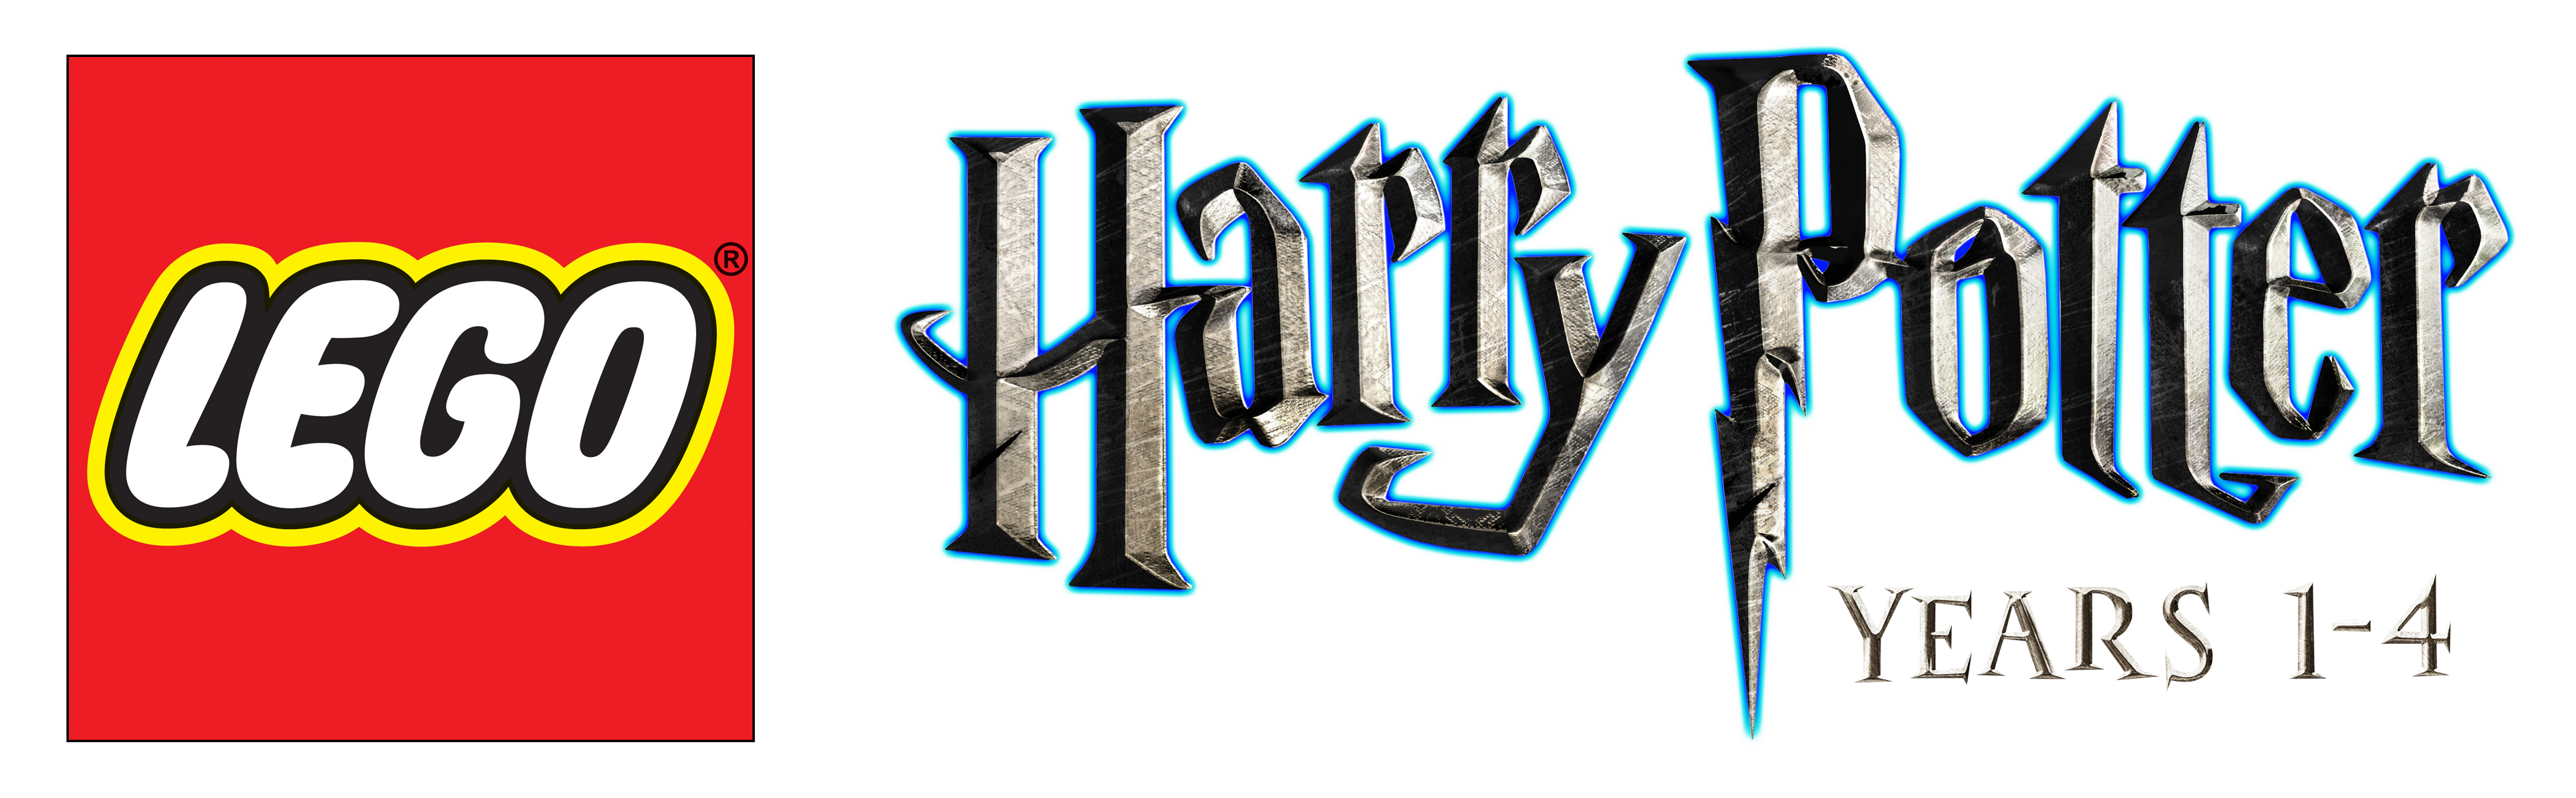 LEGO Harry Potter: Years 1-4 — Harry Potter Database